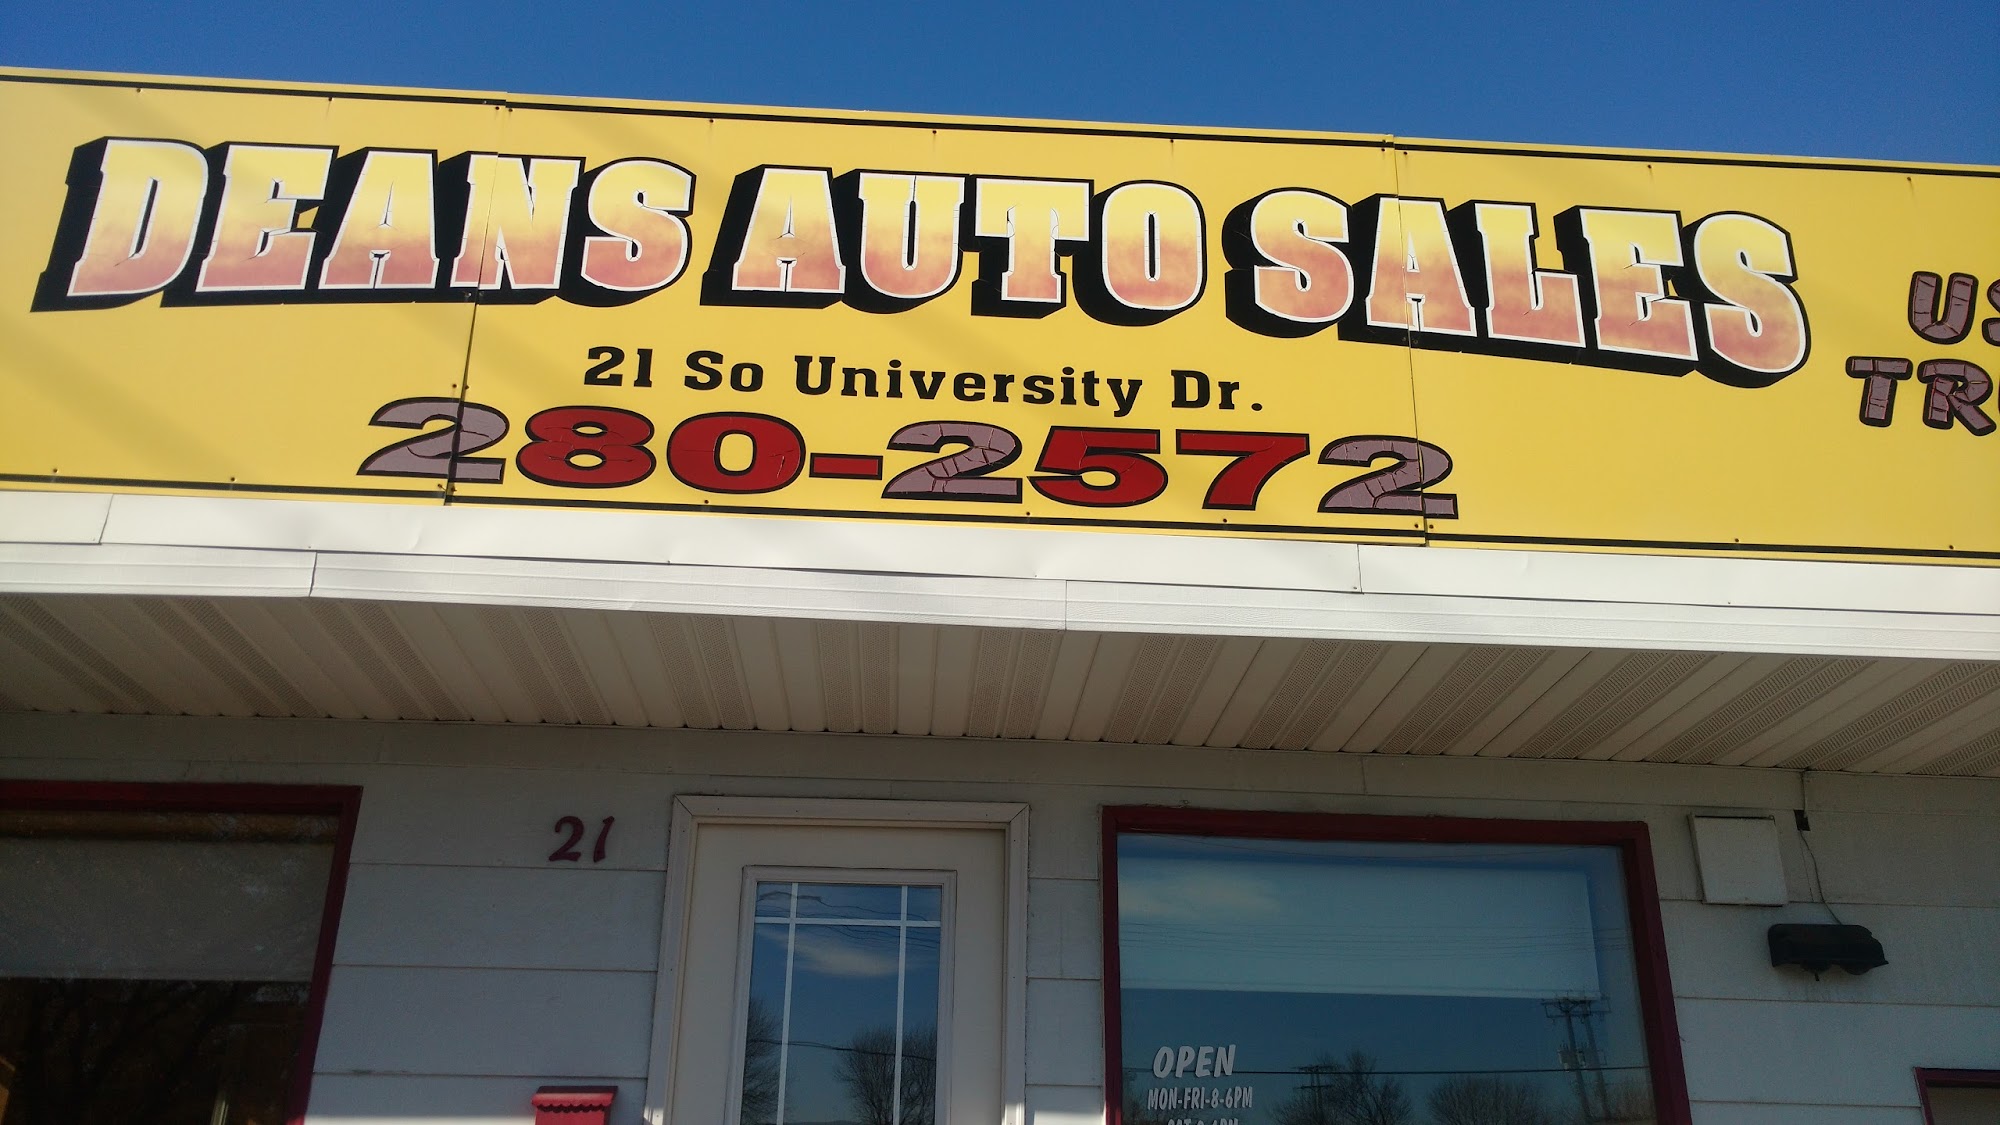 Dean's Auto Sales